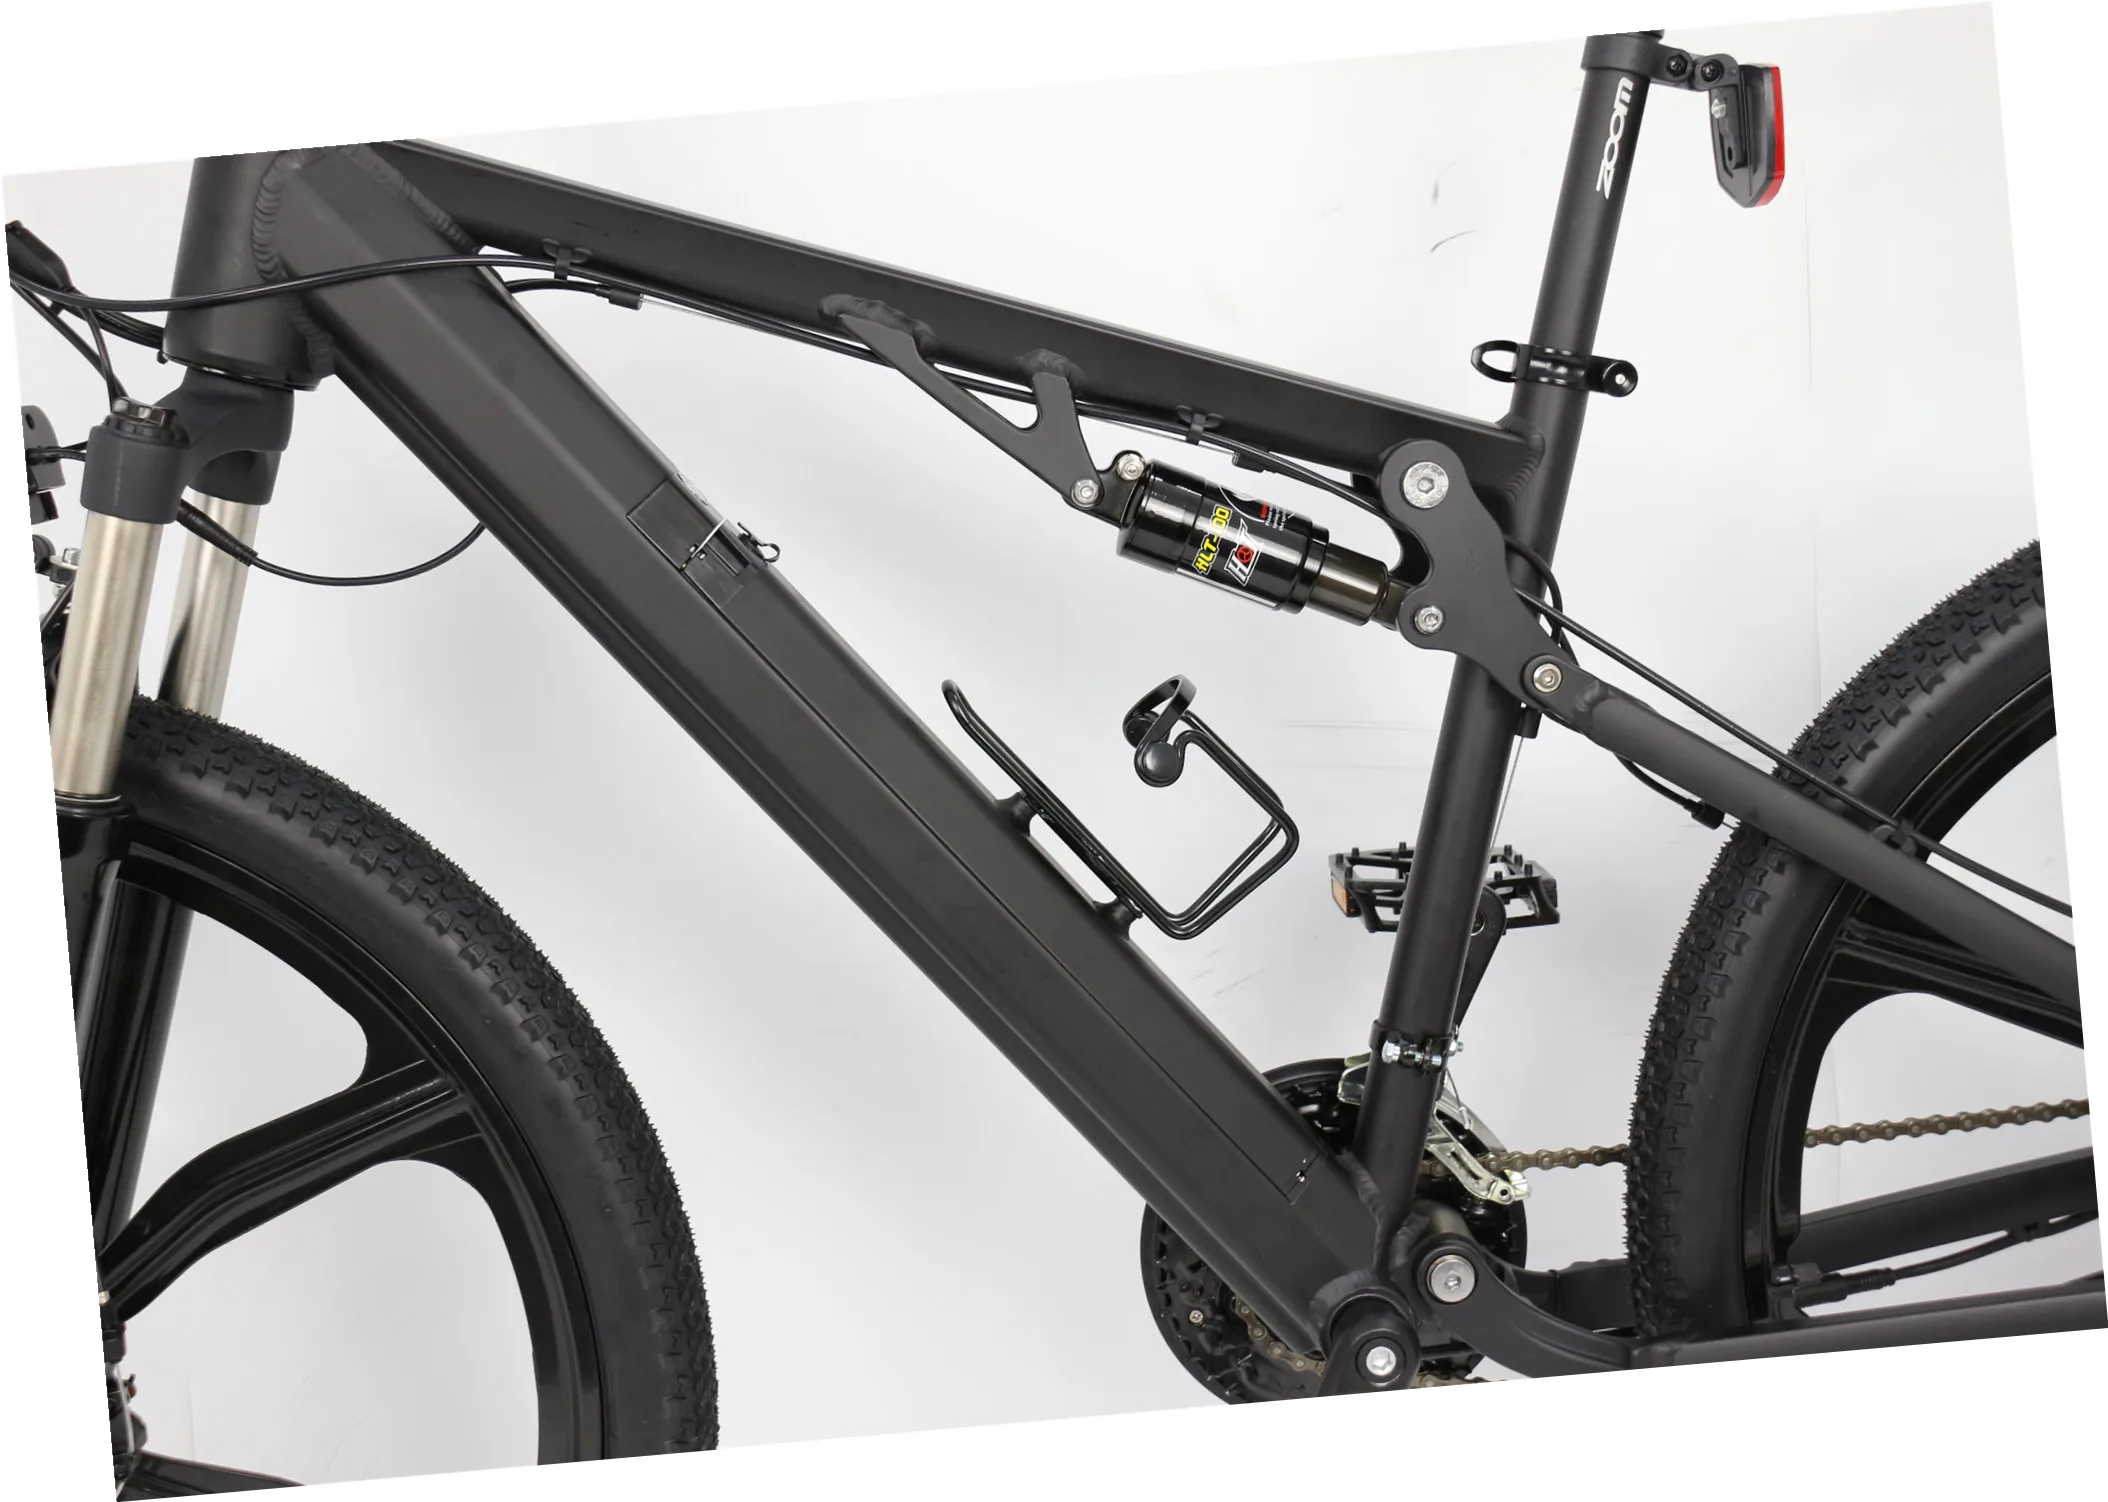 suspension carbon fram 48V 10AH 48V 350W brushless motor Li battery city electric bicycle with LED - Mountain ebike - 3